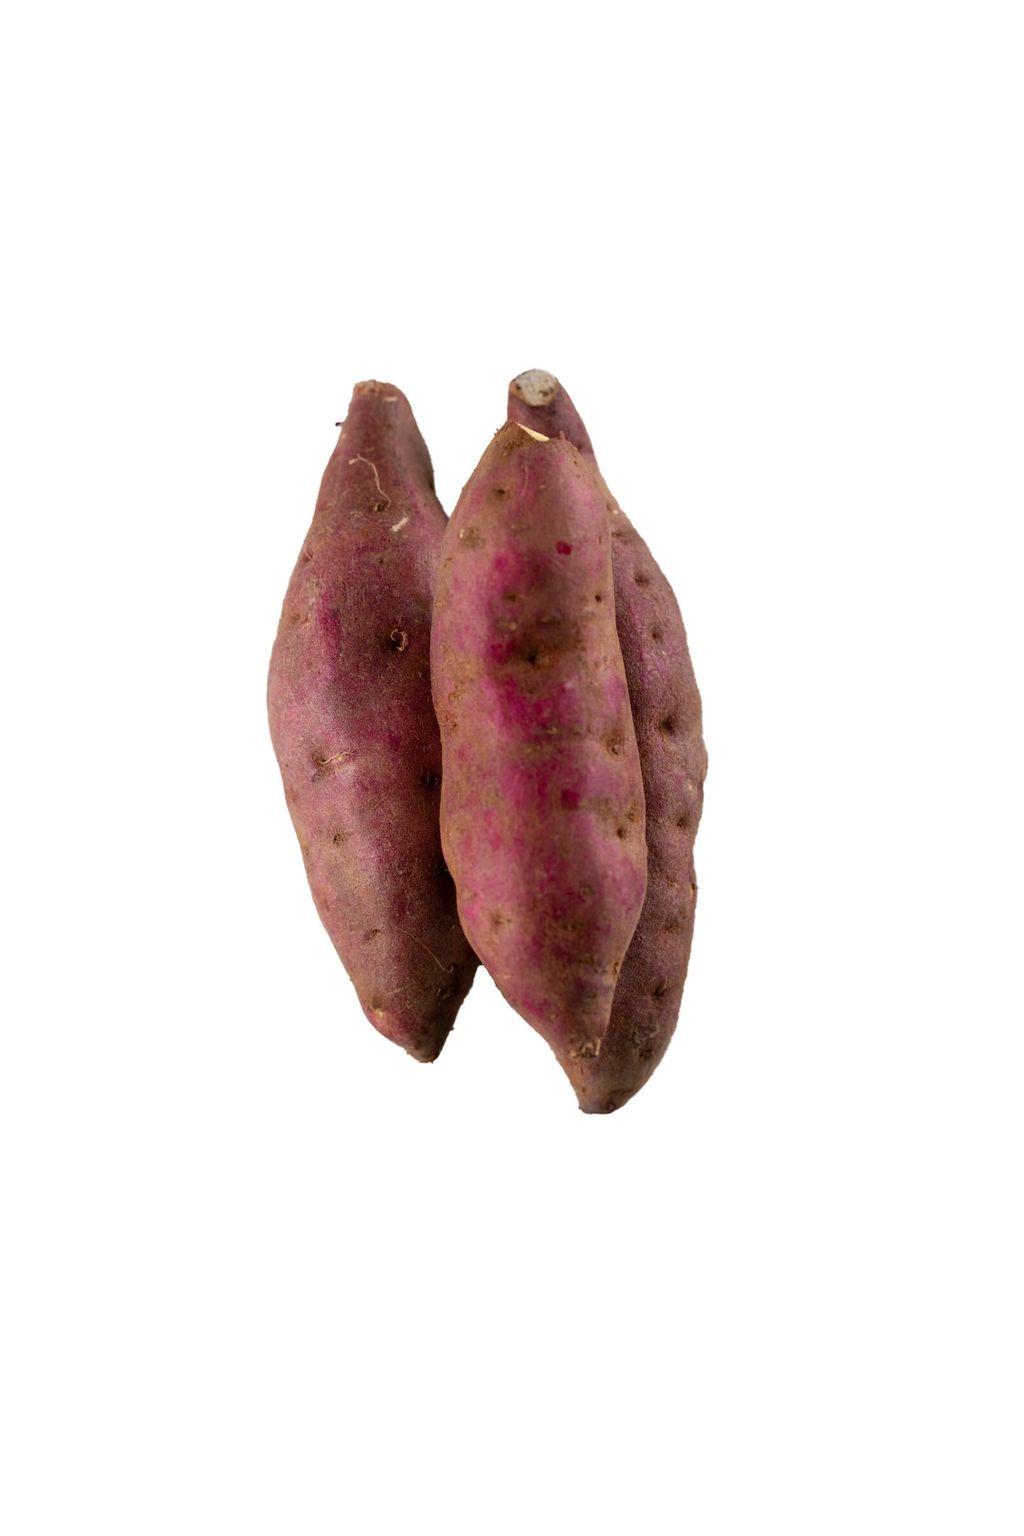 Sweet Potato 3 (White).jpg